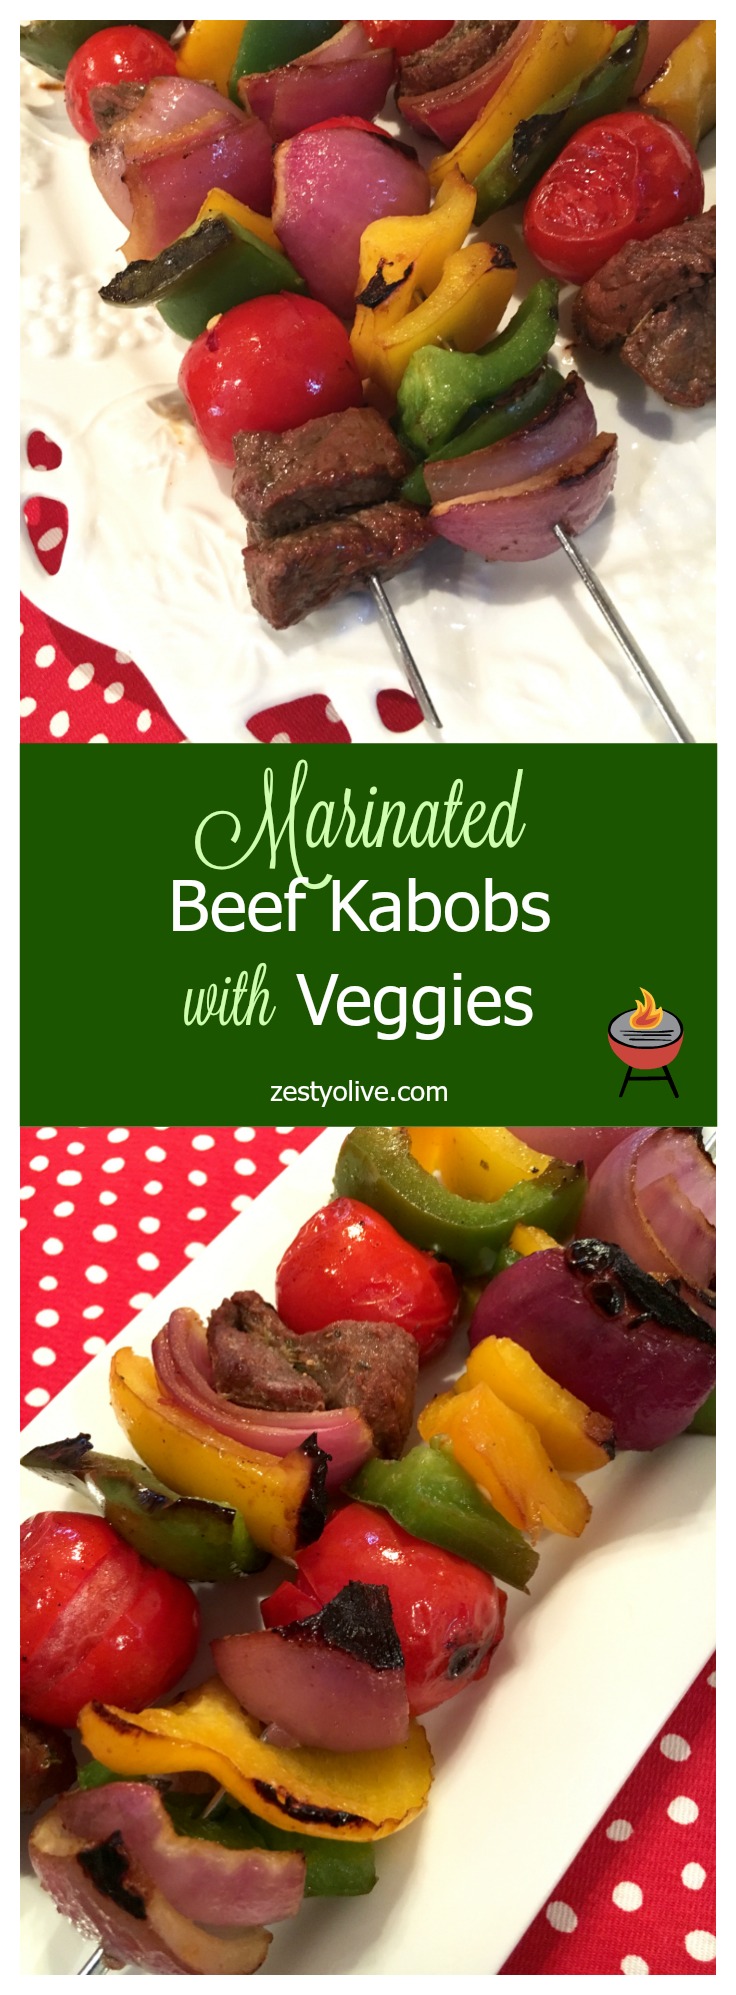 Marinated Beef Kabobs with Veggies